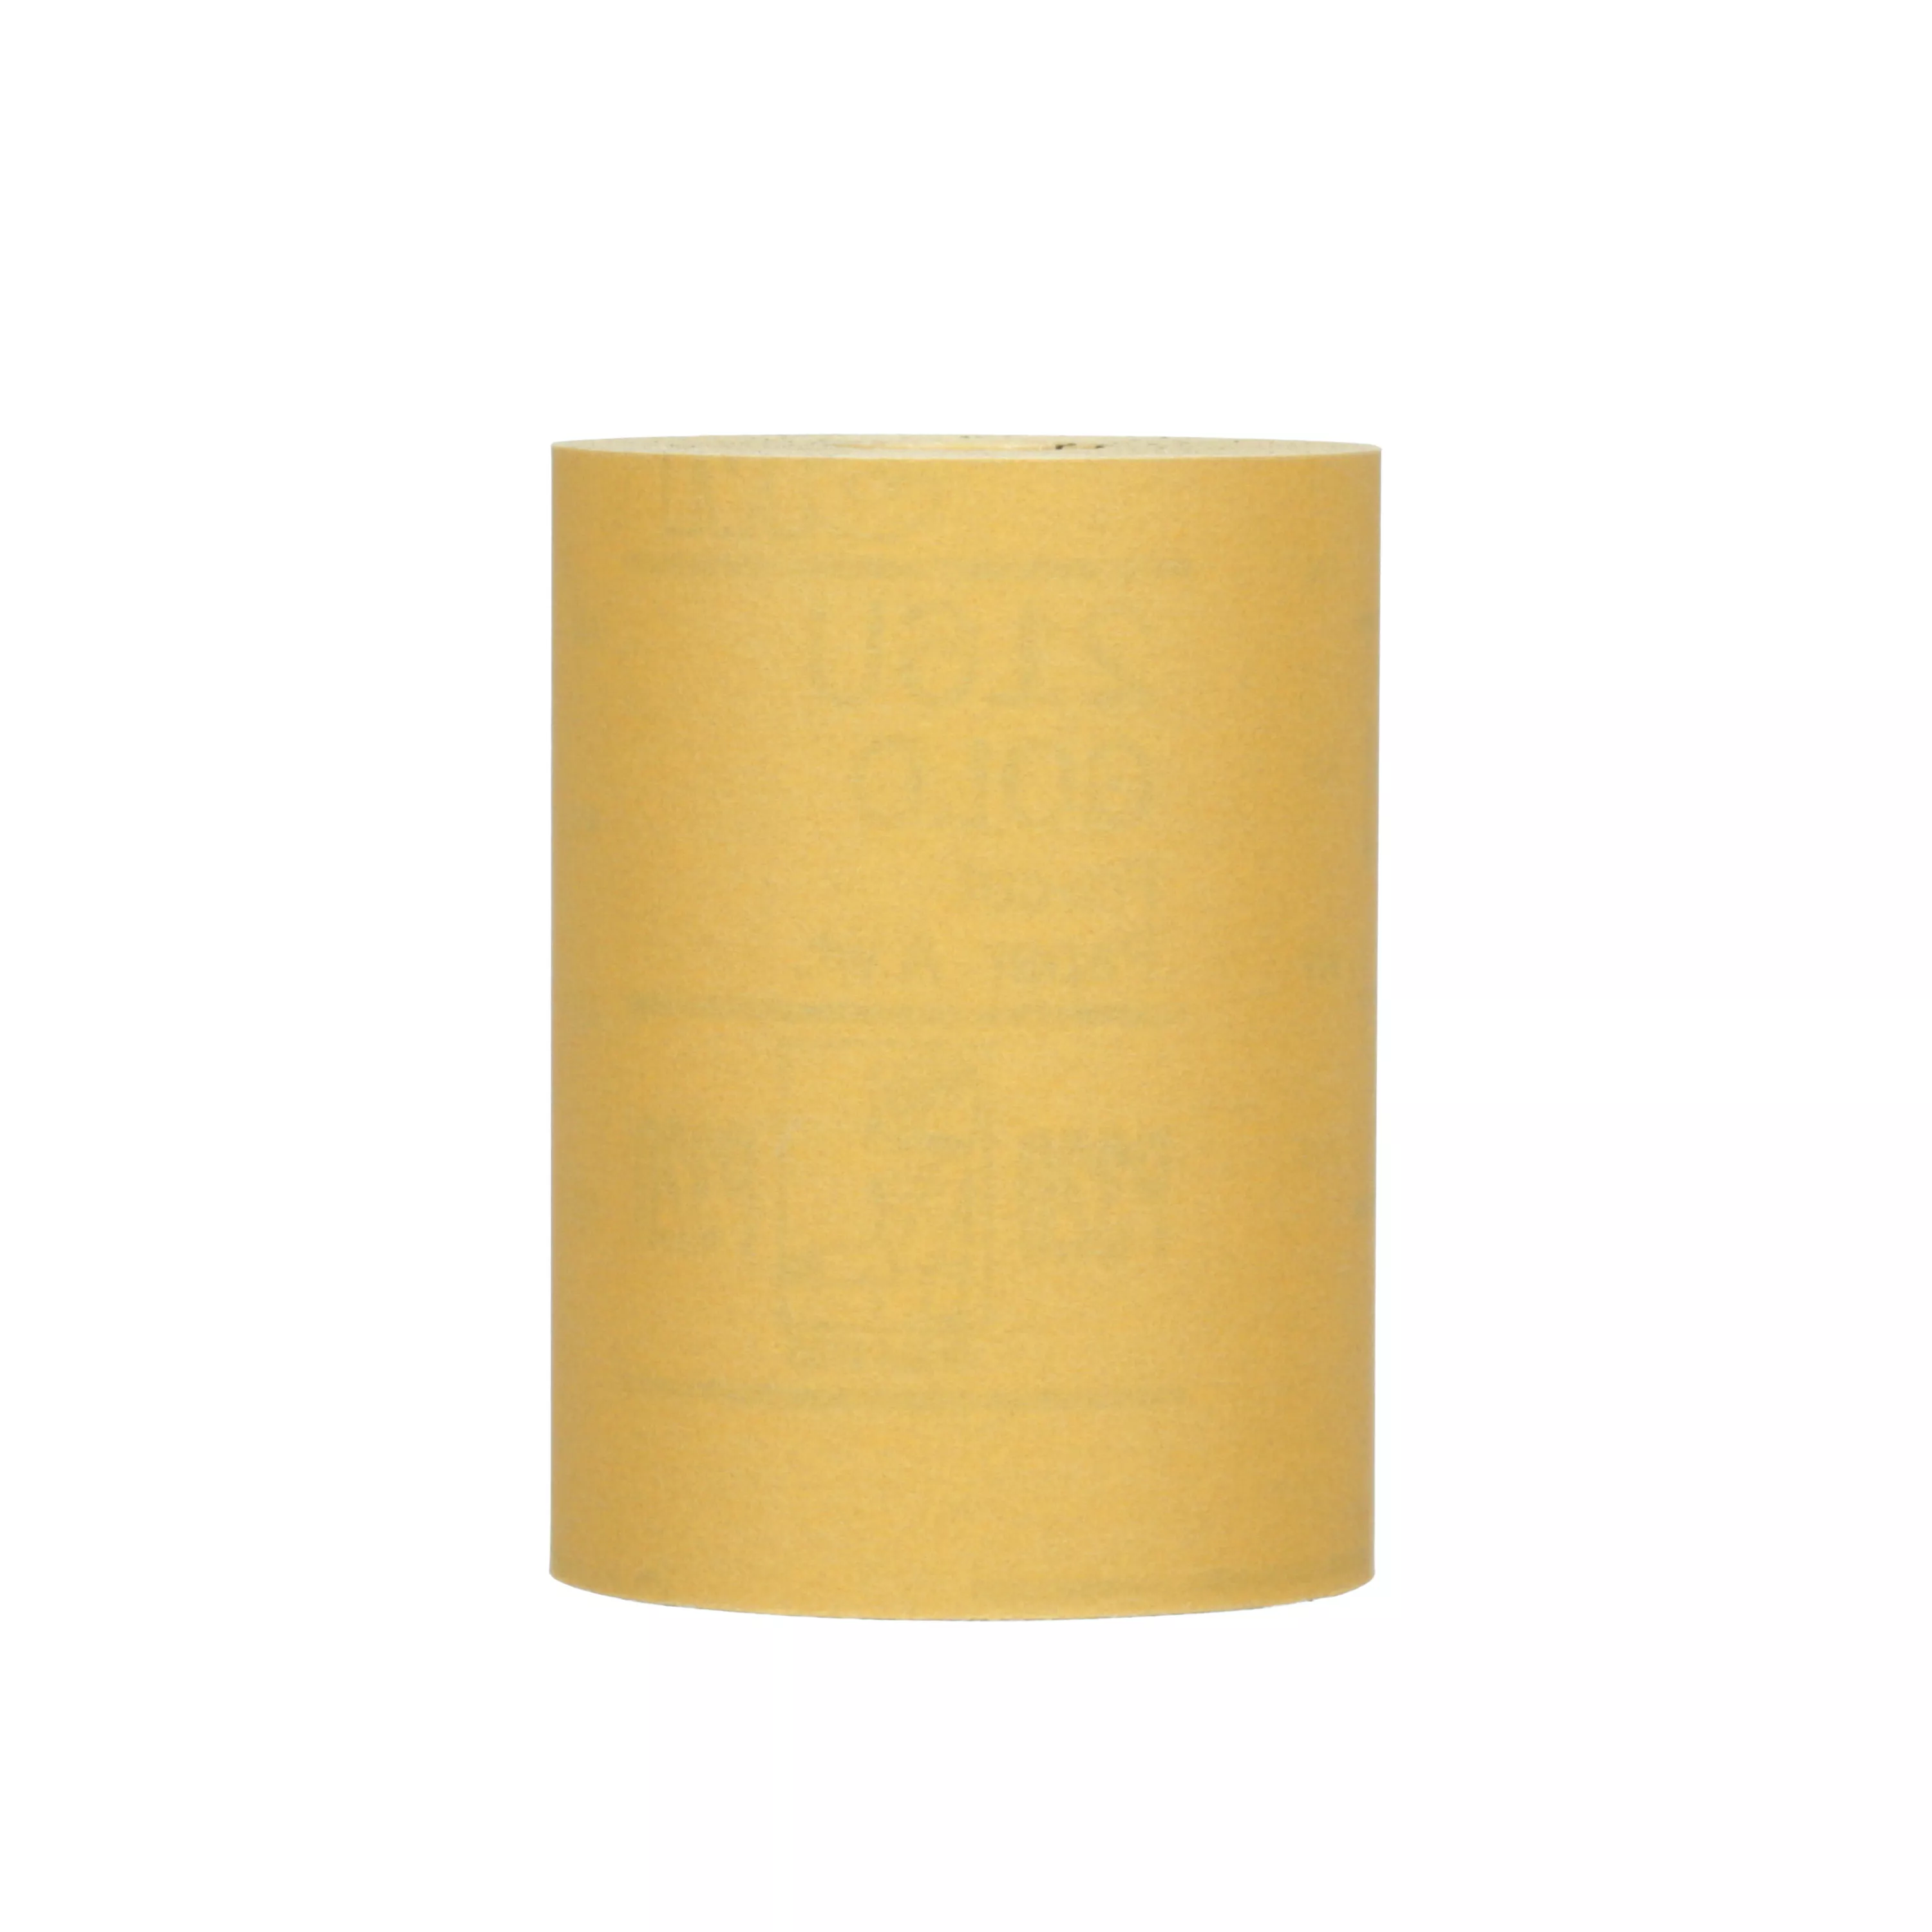 3M™ Stikit™ Gold Sheet Roll, 02691, P320, 4 1/2 in x 25 yd, 6 rolls per
case